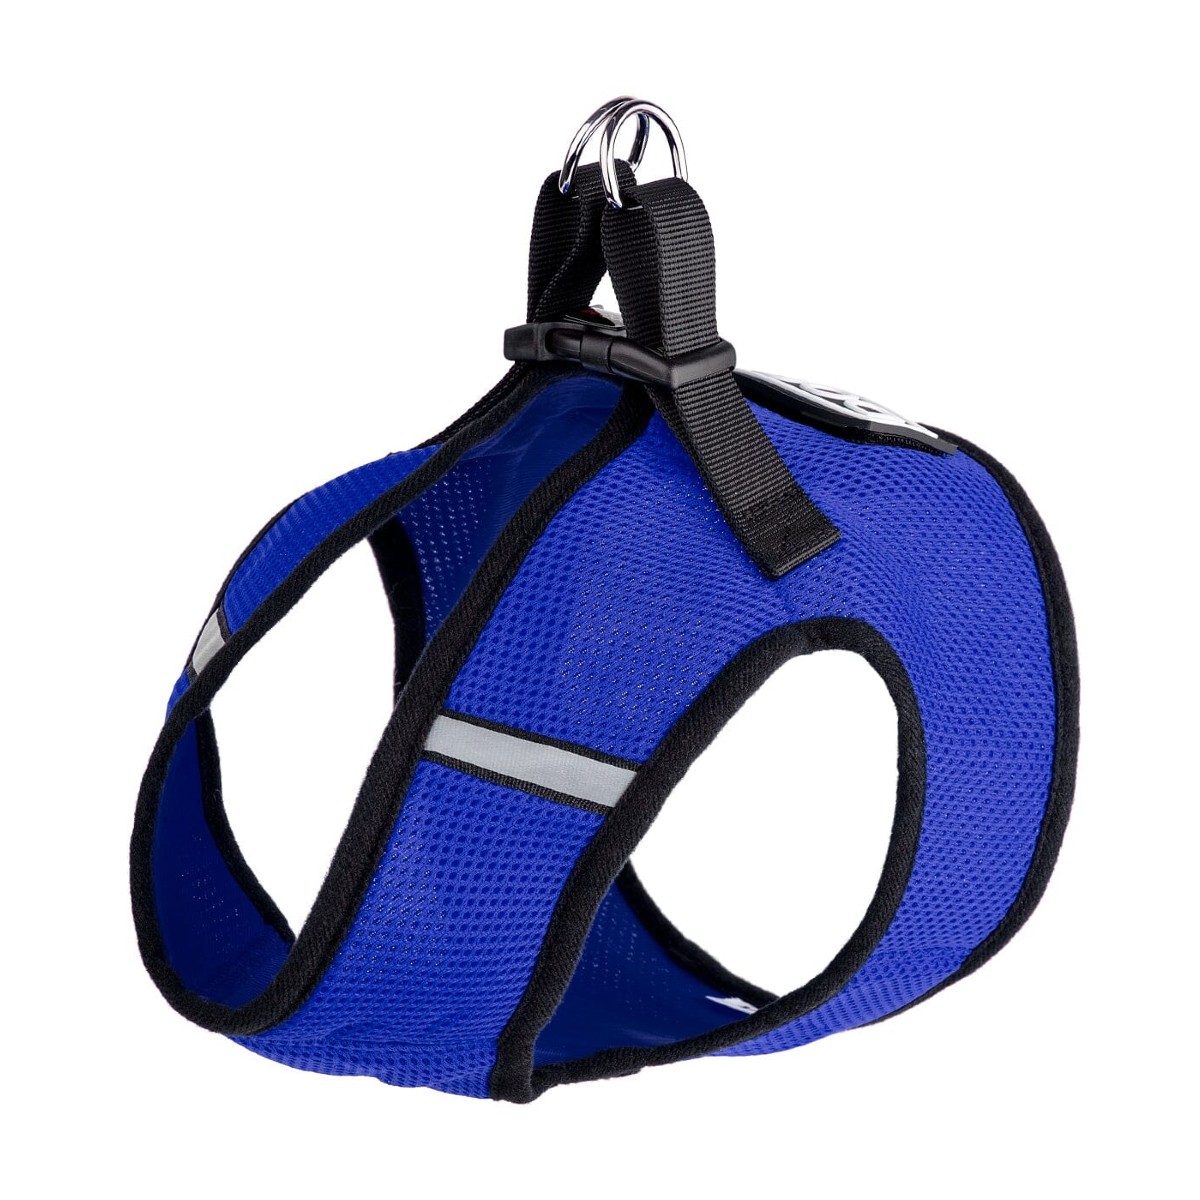 Boston Mesh Dog Harness + Built-in Hook & Loop Fastener - Royal Blue